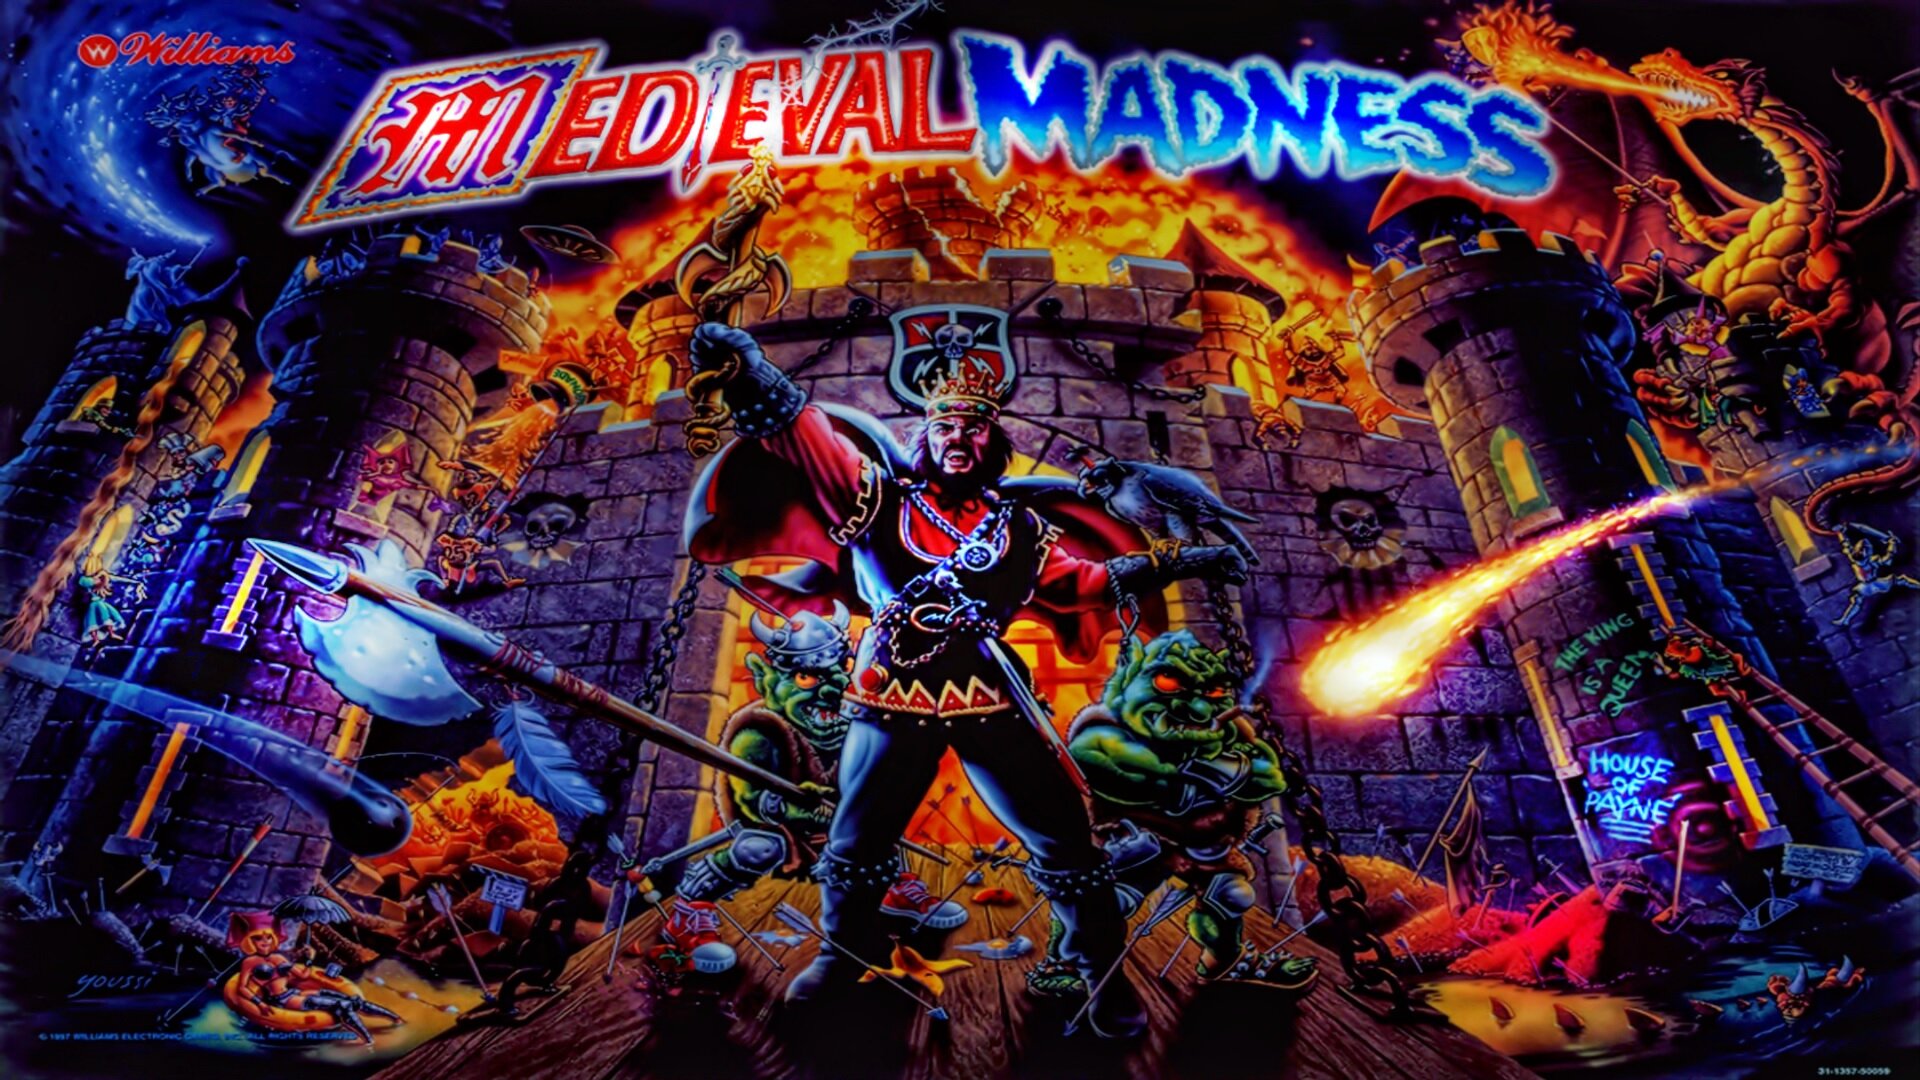 Medieval Madness (1997) b2s.zip 1.0